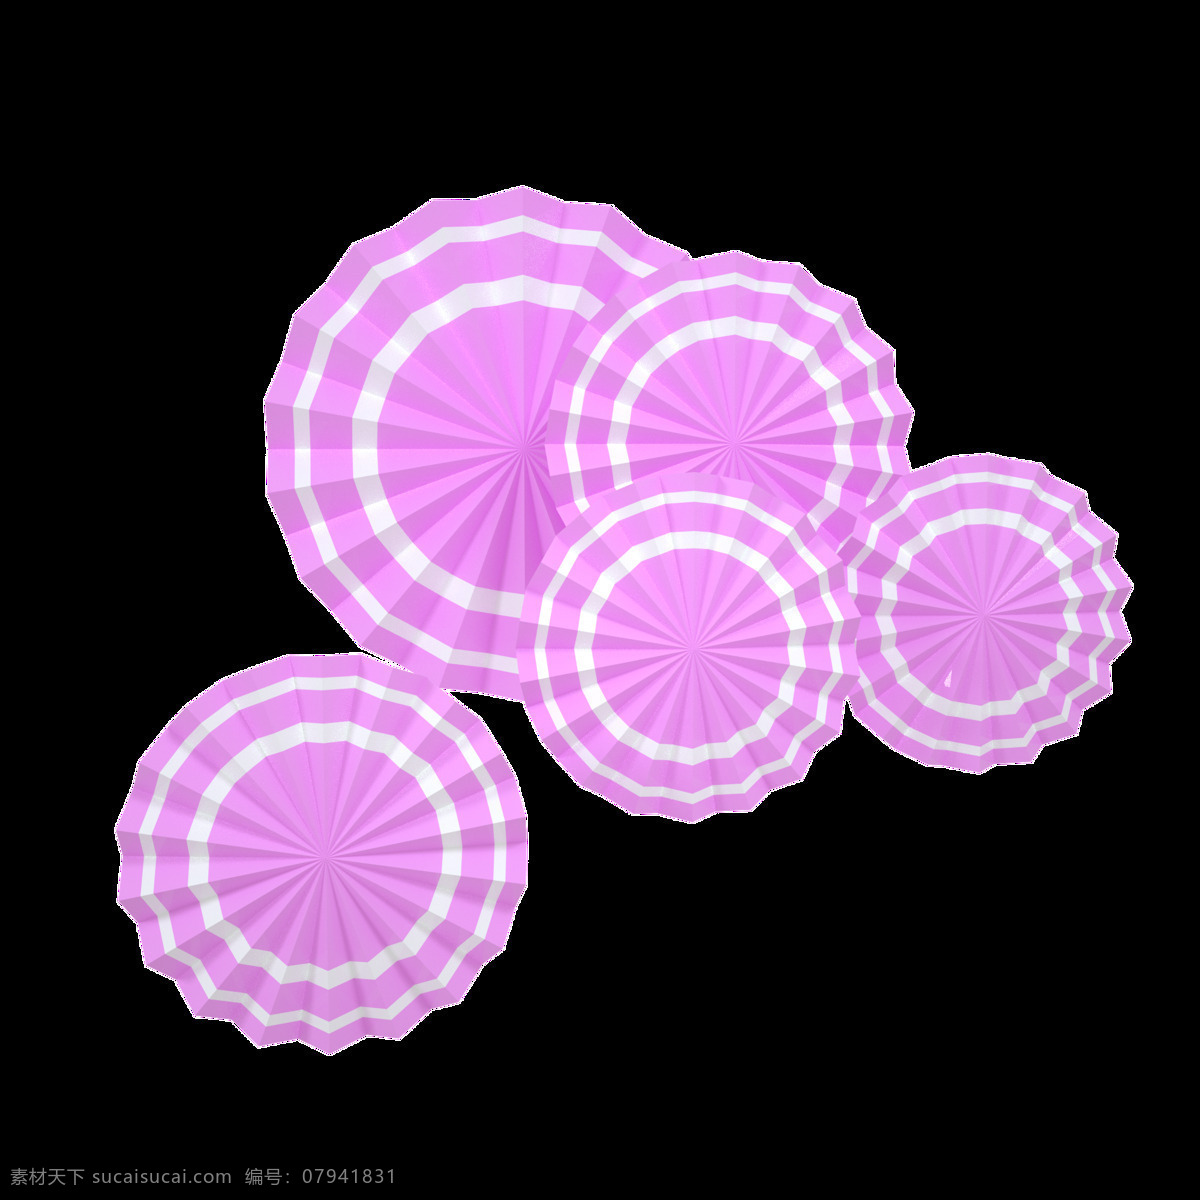 c4d 粉色 立体 圆盘 扇子 情人节 母亲节 520 电商 装饰 点缀 免抠图 唯美 粉白色 电商装饰